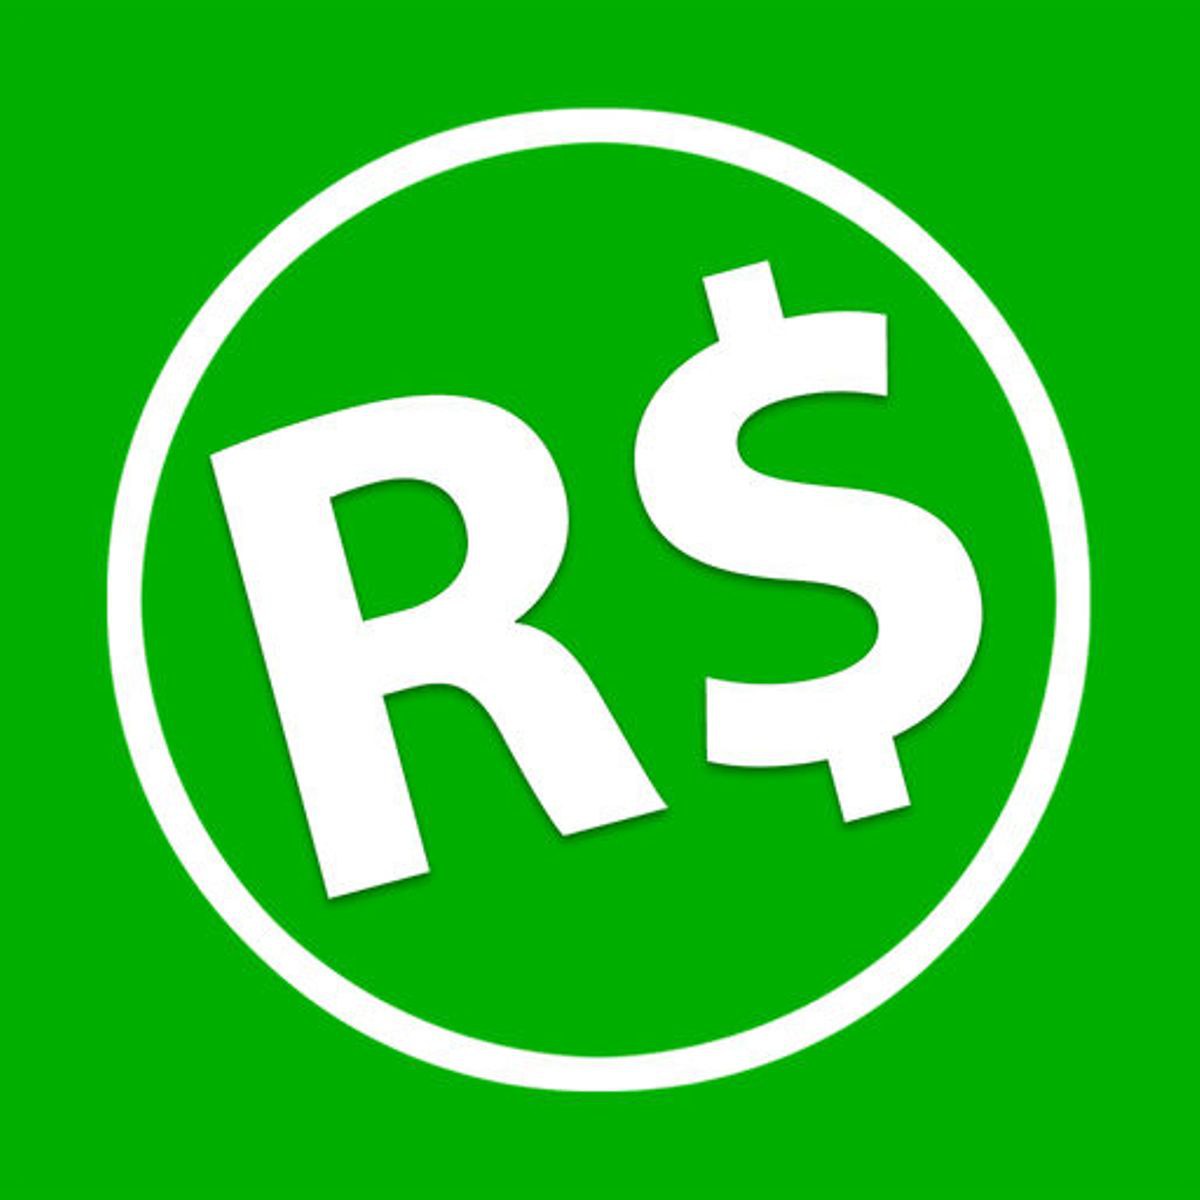 Rbx Robux Rewards - how to know when oprewards robux restock robux generator